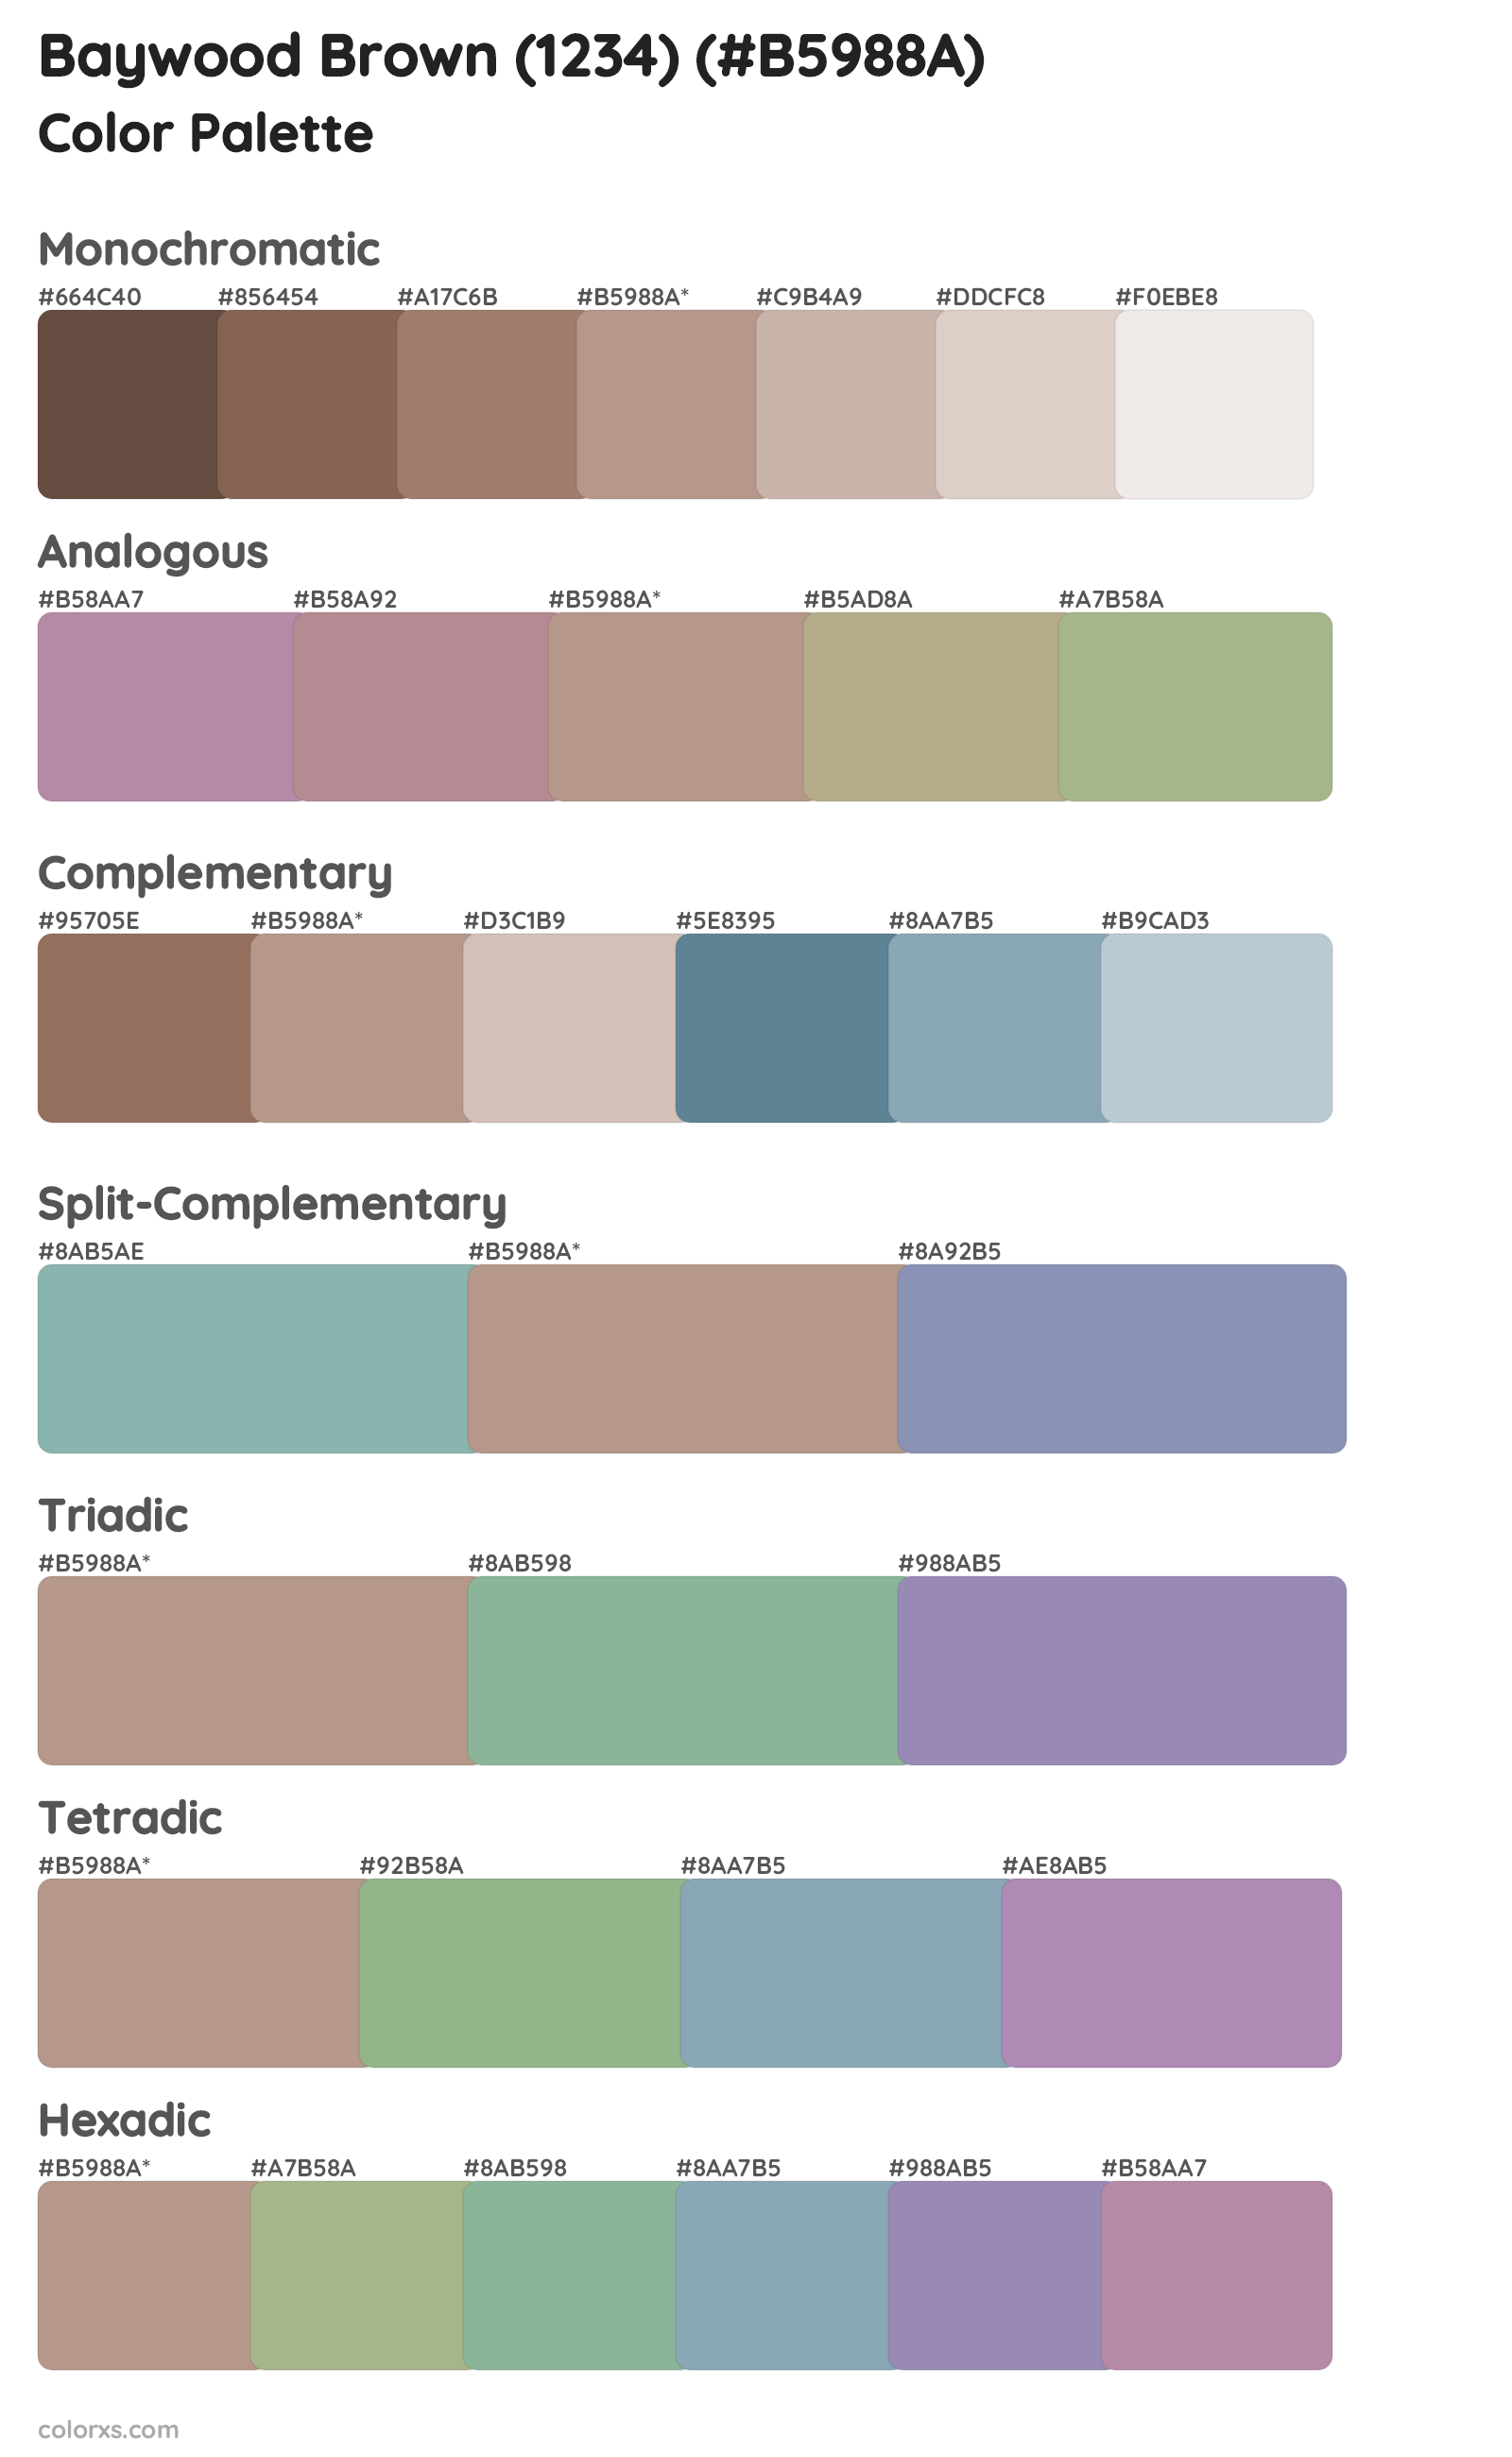 Baywood Brown (1234) Color Scheme Palettes